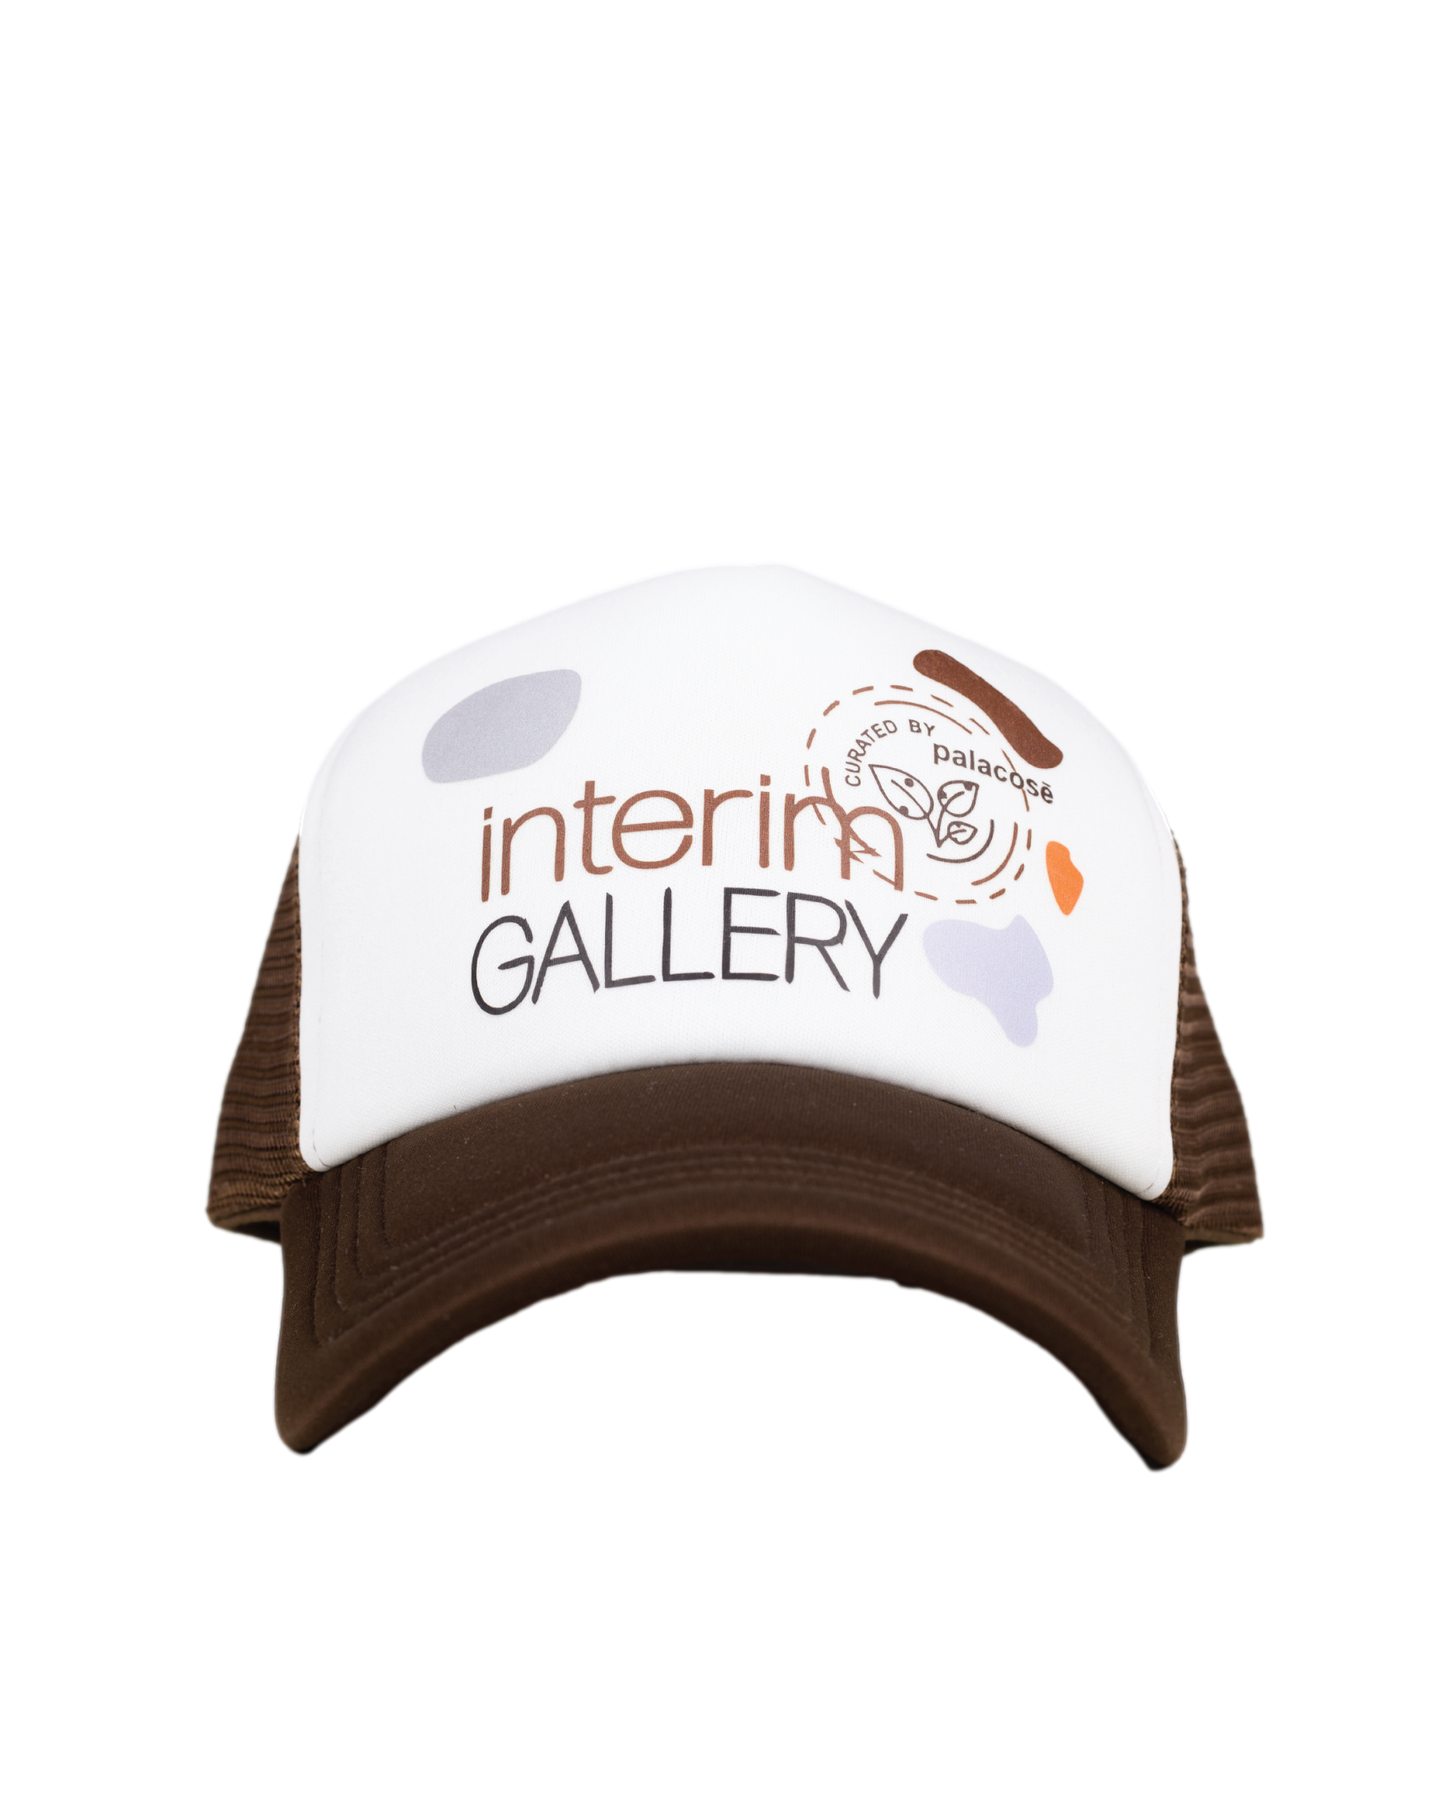 interim gallery netback hat